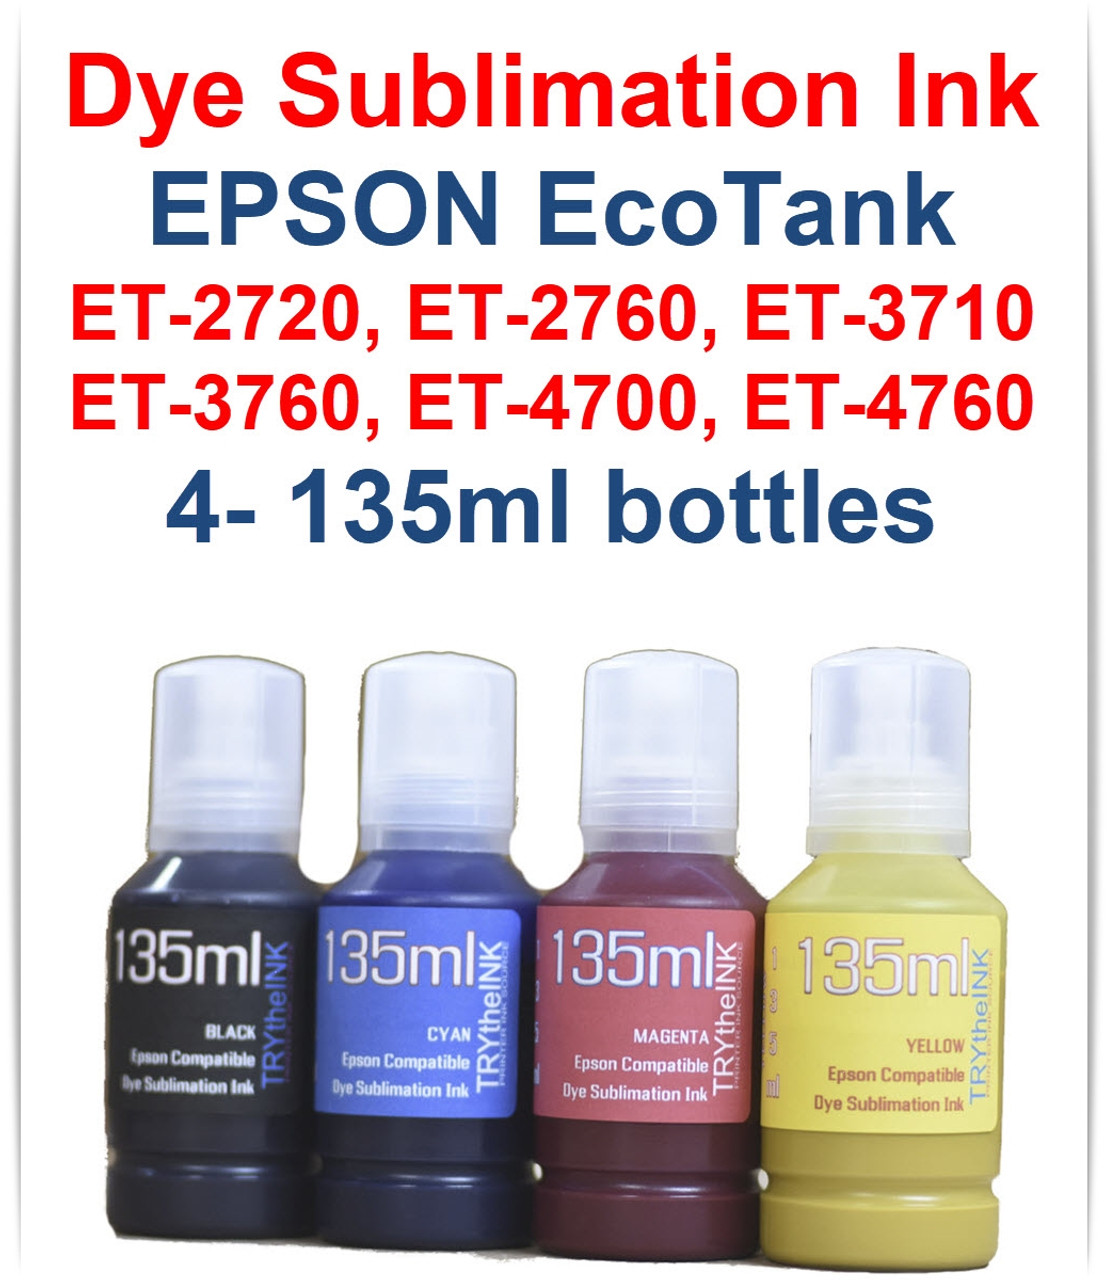 EPSON EcoTank ET-3710 ET-3760 Printer 4 Color Package 135ml bottles Dye Sublimation Ink